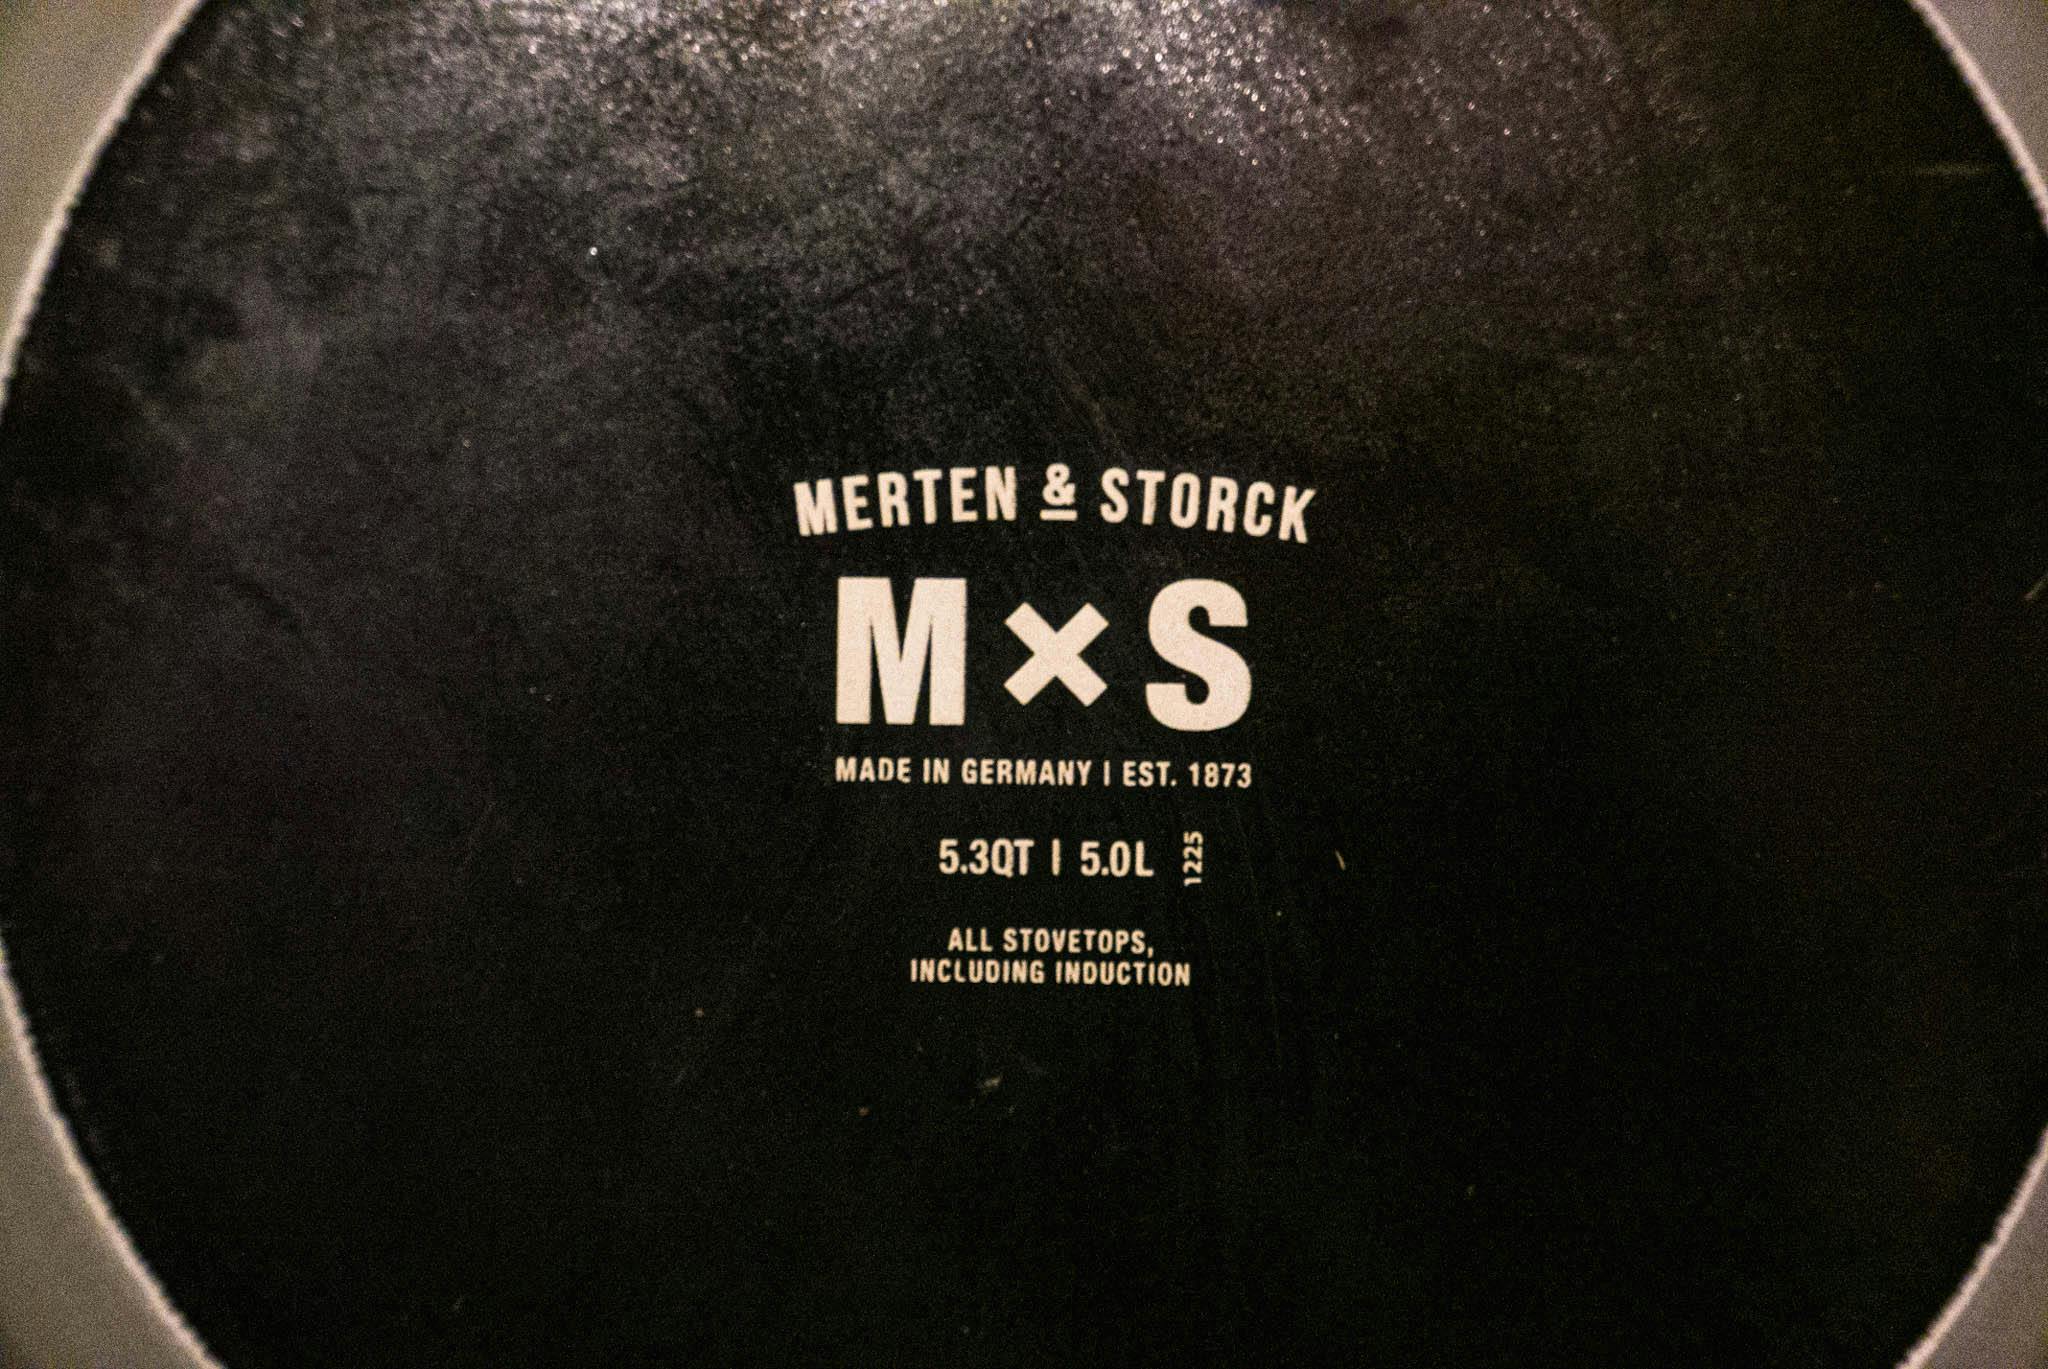 Merten & Storck German Enameled Iron Dutch Oven